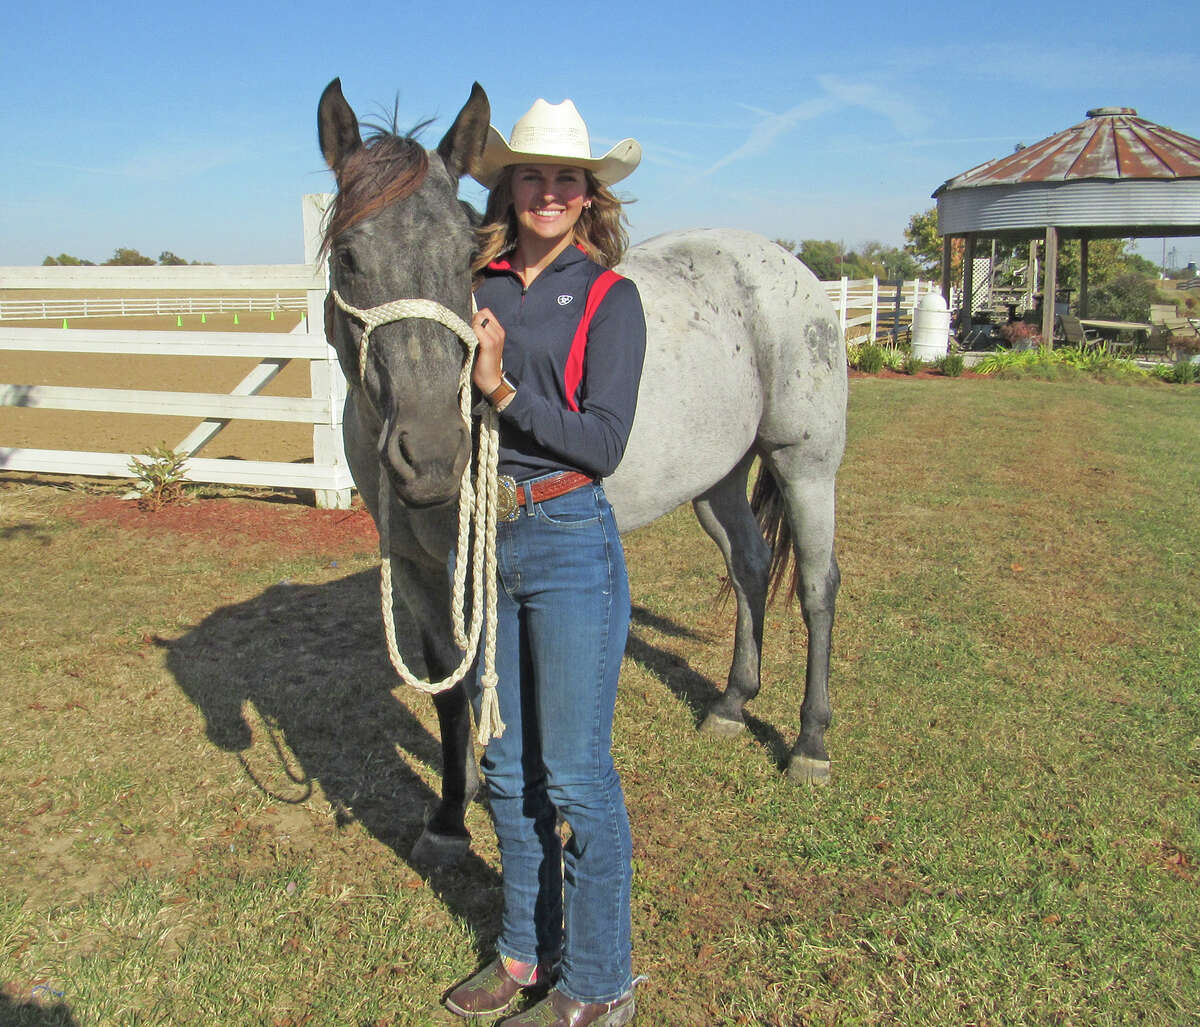 Grace Heepke with her horse, Goose. Heepke, a junior at Edwardsville High School, recently did a weeklong horseback ride with veteran Matt Perella, who is raising awareness and funds to benefit U.S. veterans.